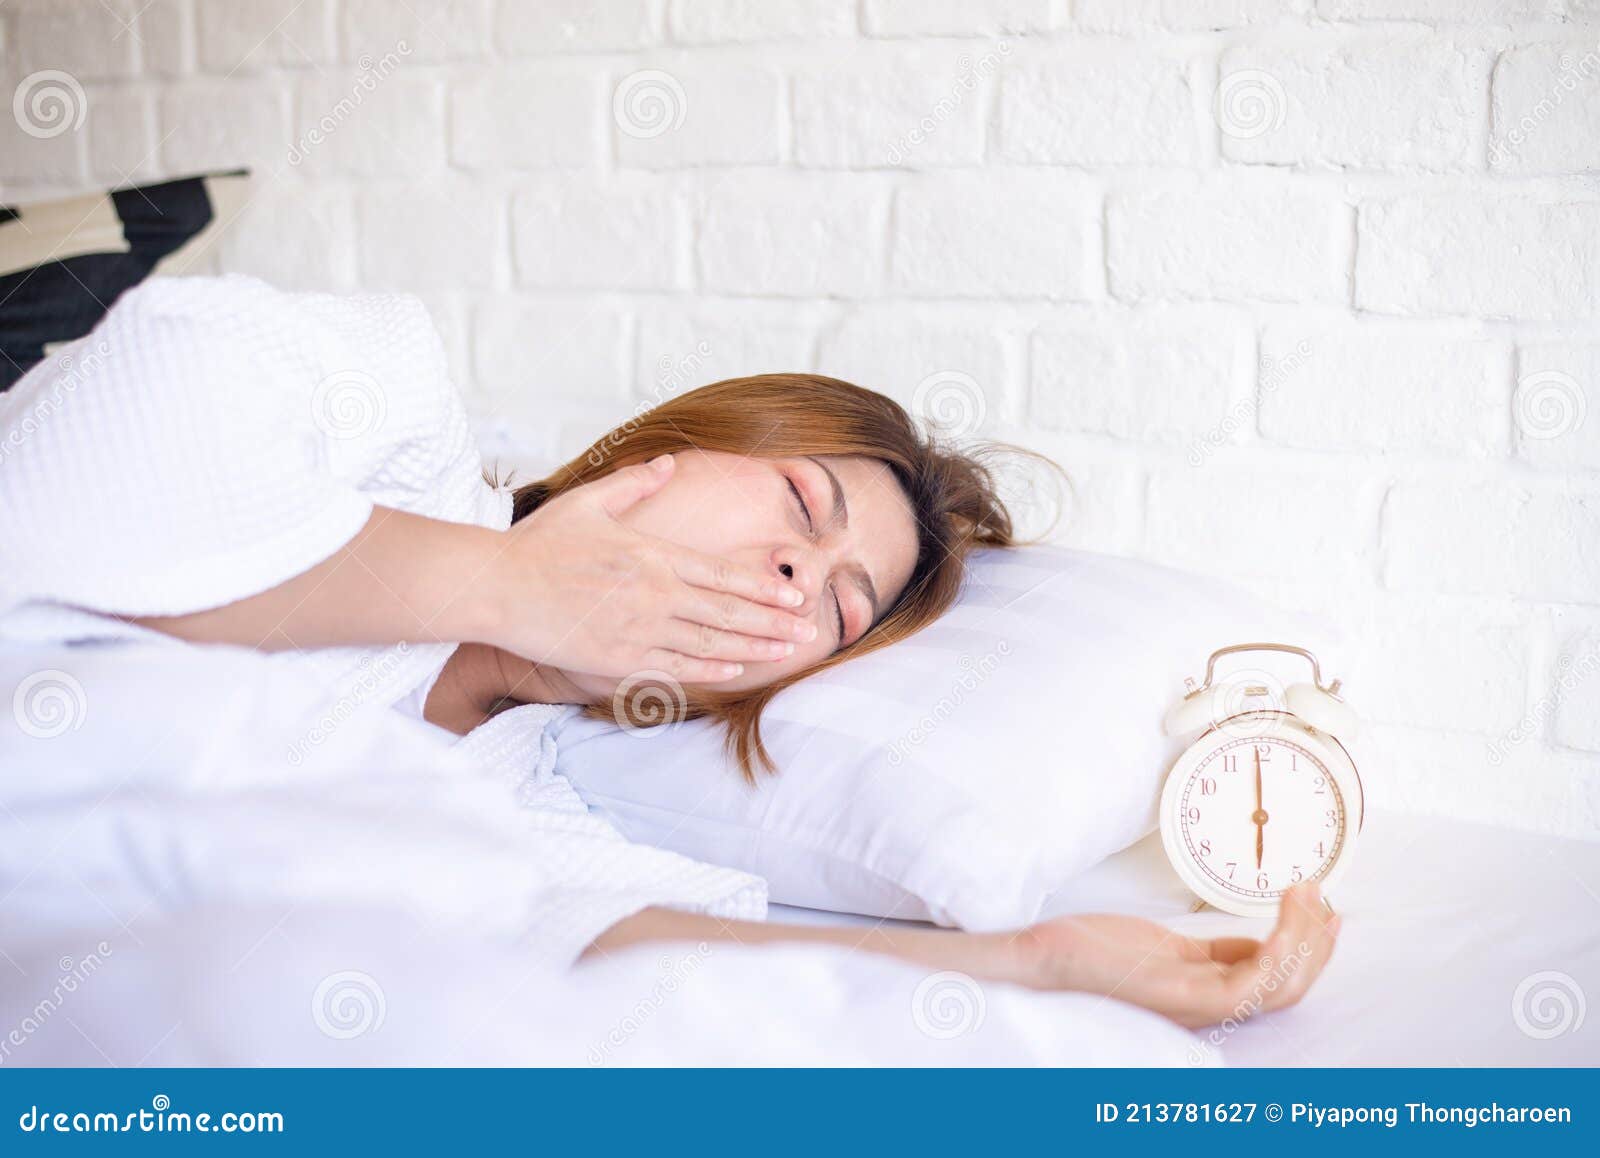 asian woman yawning on bed and tired sleepy,female having symptoms sleepiness